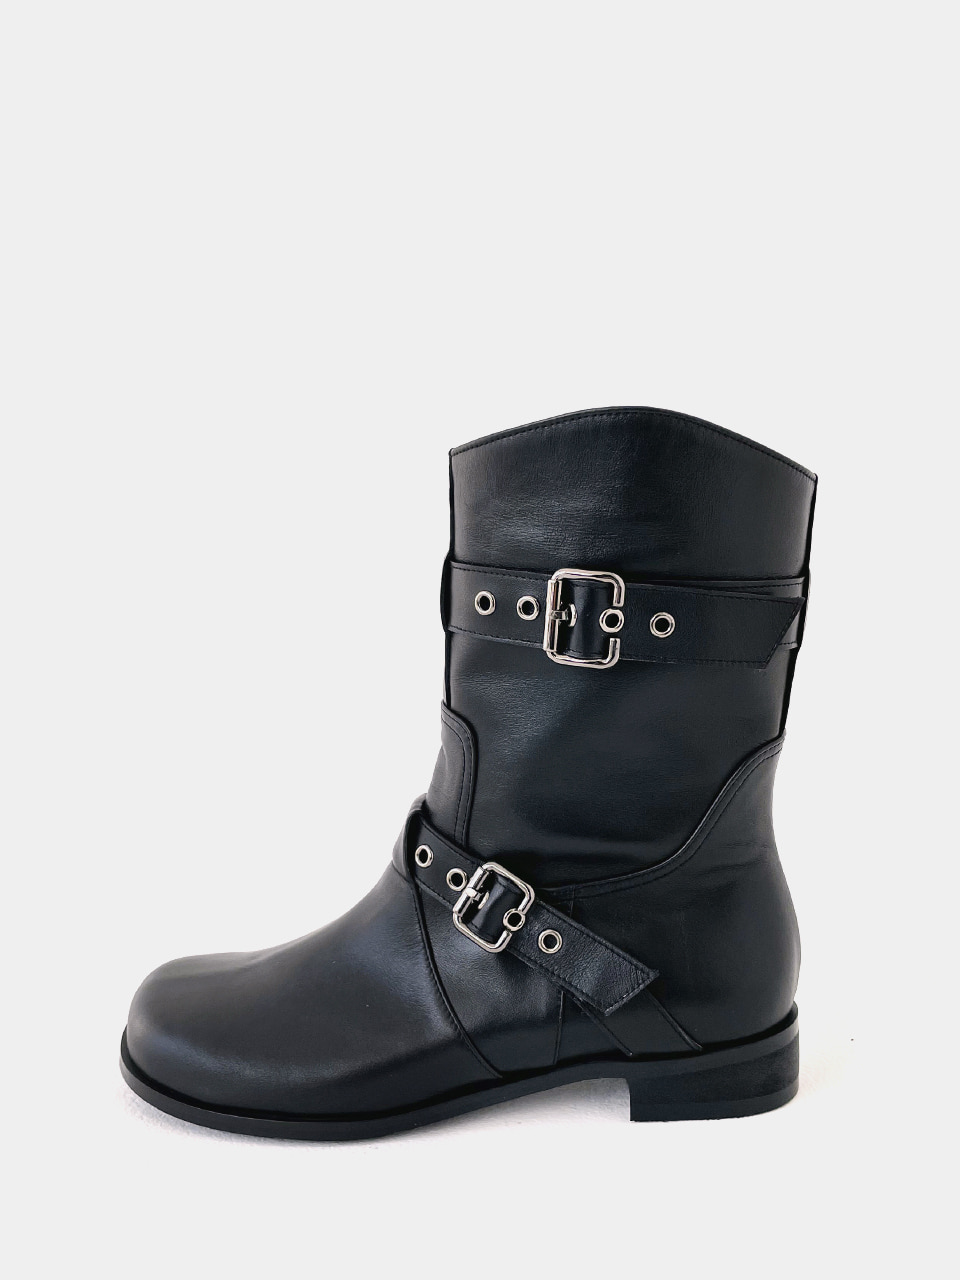 [Exclusive] Mrc092 Nickel Boots (Black)